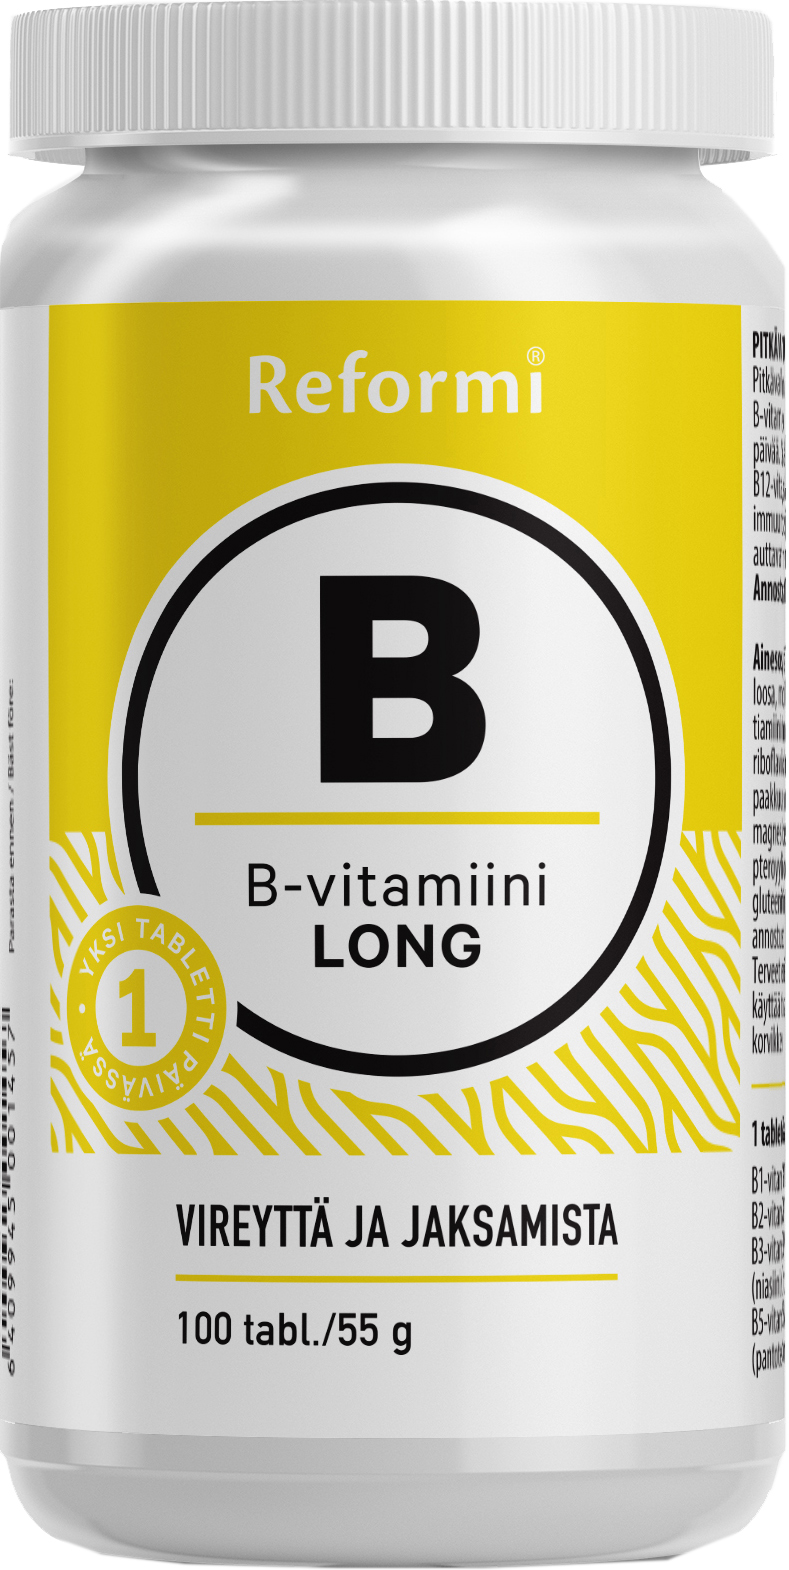 reformi_b_vitamiini